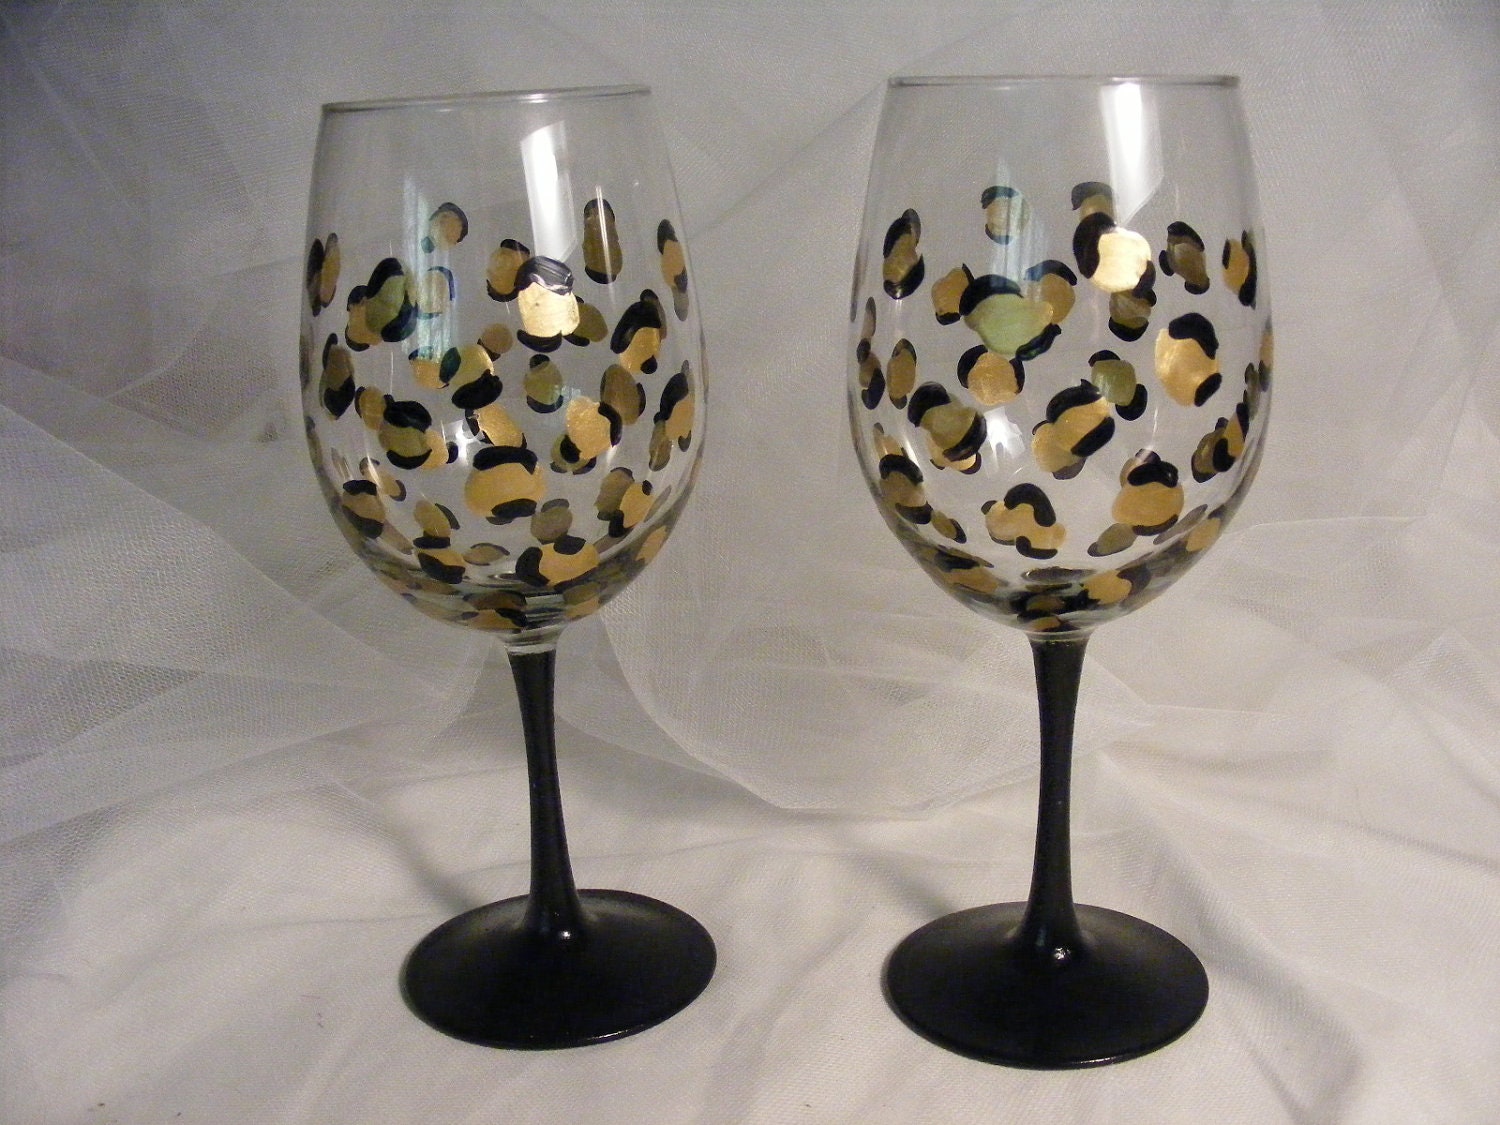 Leopard Print Acrylic Wine Glasses 6ct, Cheetah Print Stemless